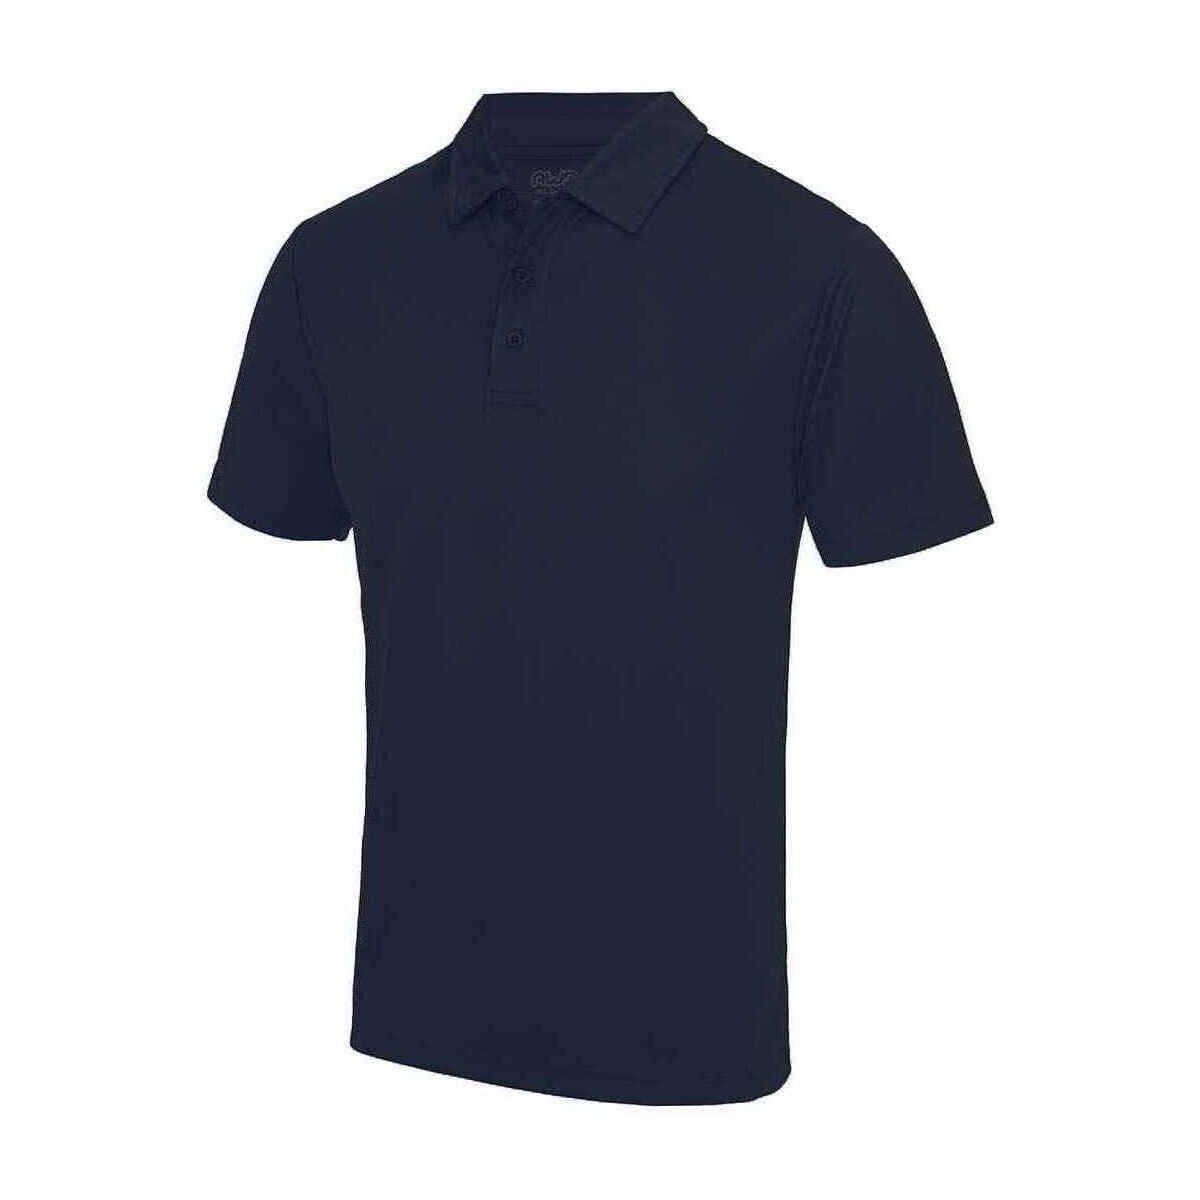 textil Hombre Tops y Camisetas Awdis Cool JC040 Azul